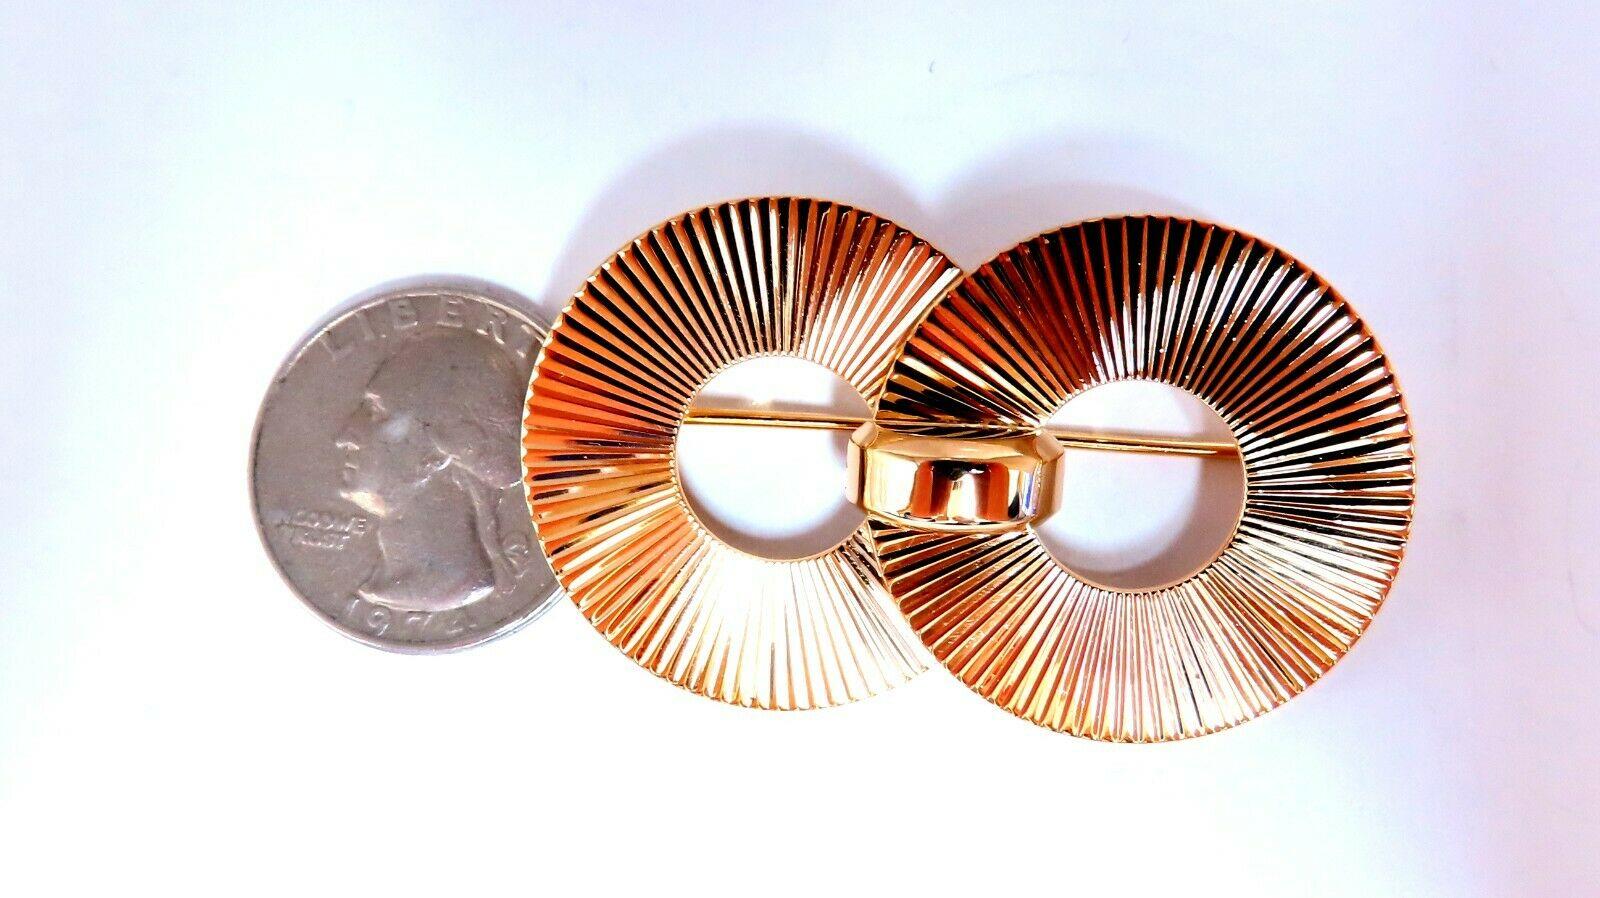 Art Deco Mod Gold pin.

2 x 1.2  inch 

14kt. yellow gold 

15 grams